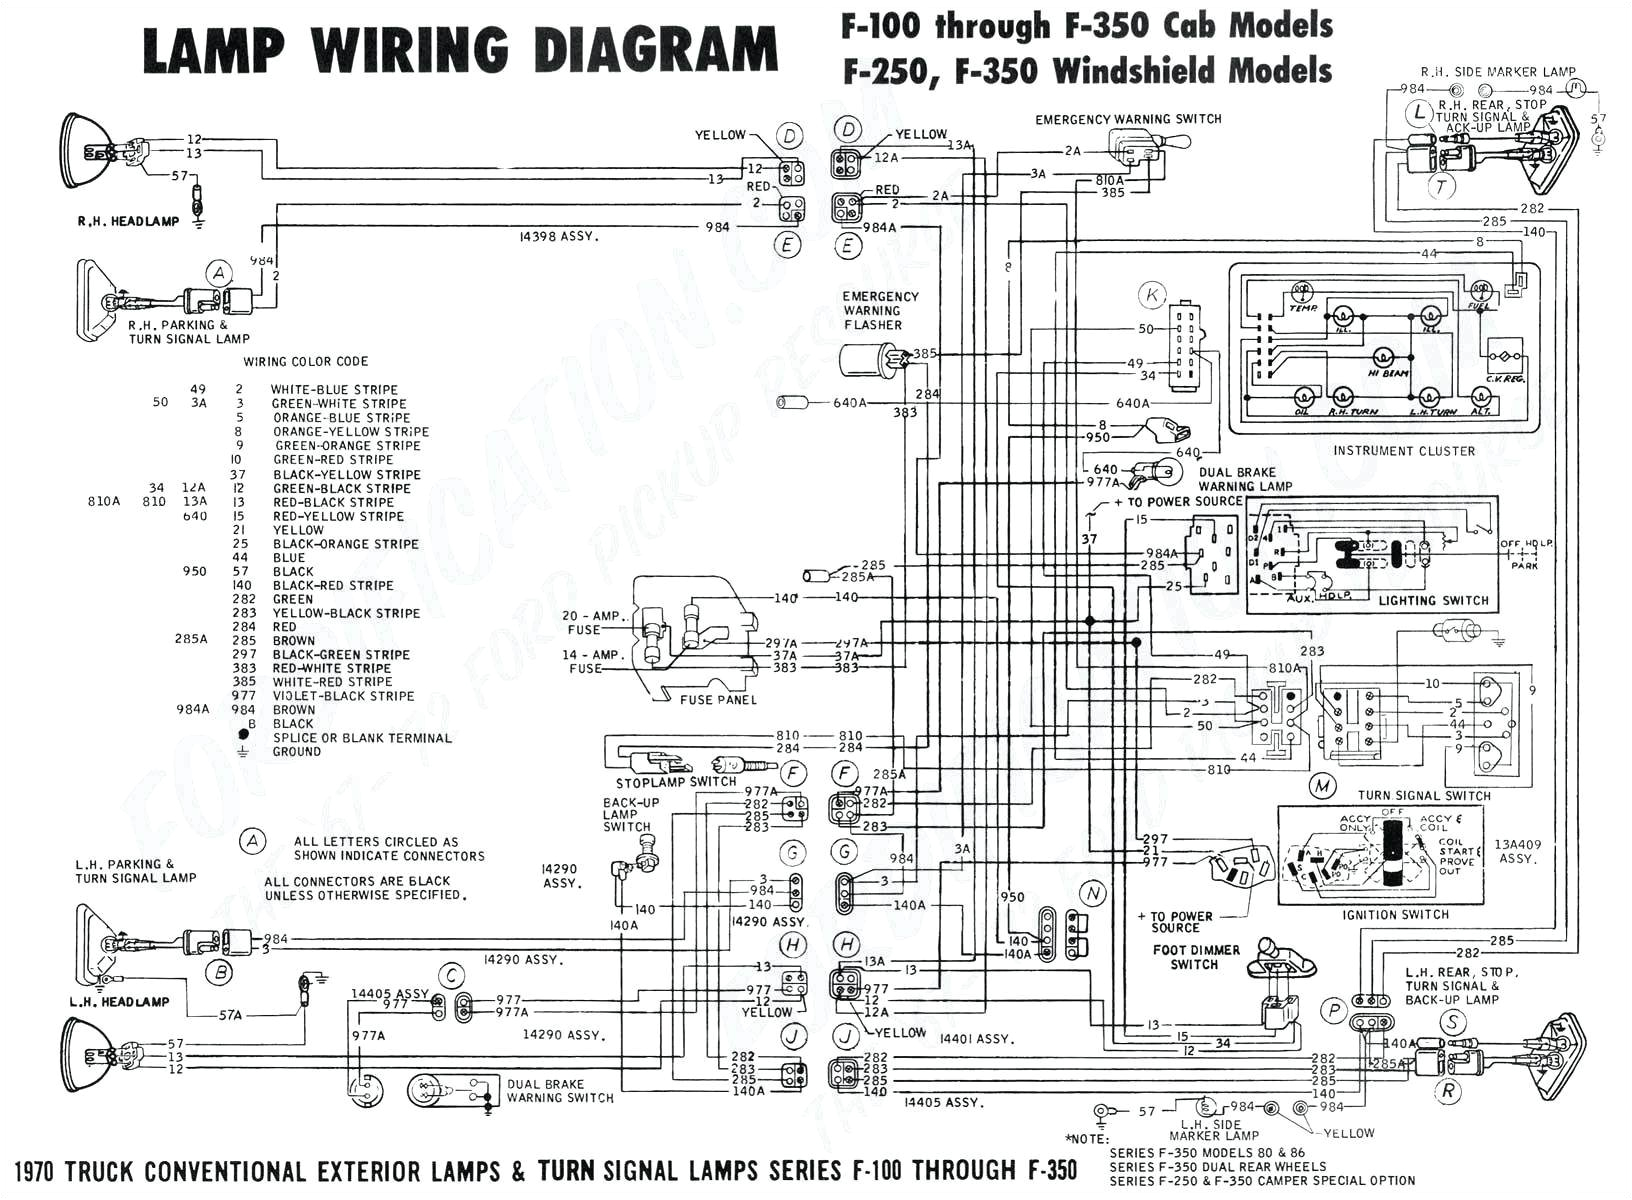 wiring diagram free download mercedes benz vacuum systems diagram wiring diagram for 1986 mercedes benz